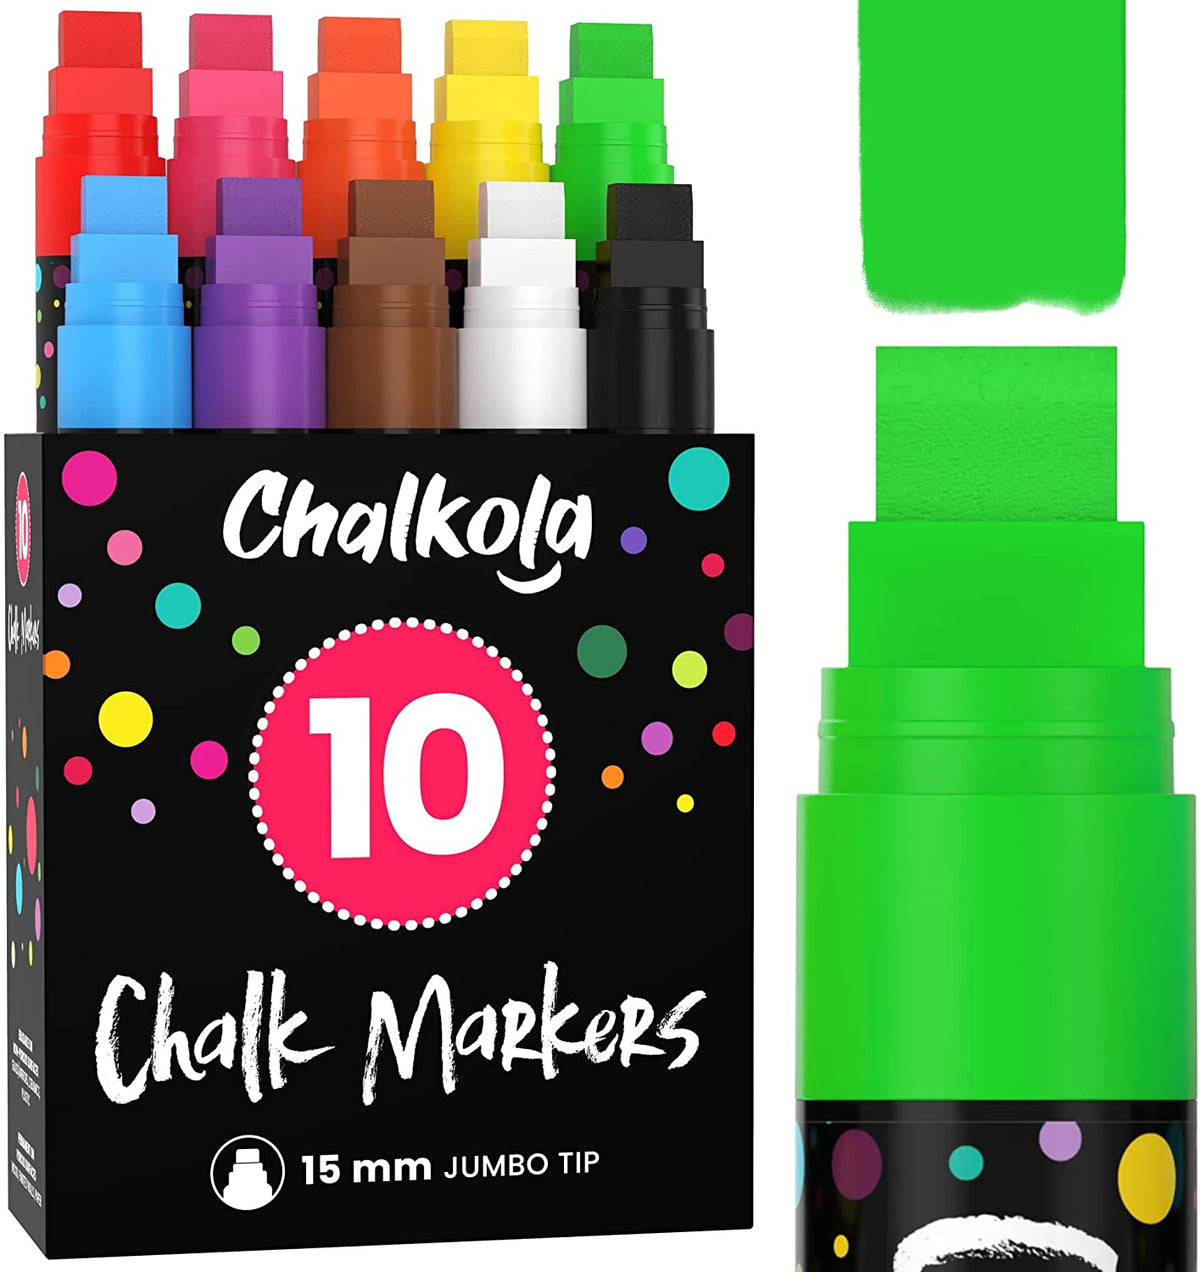 neon chalk markers 